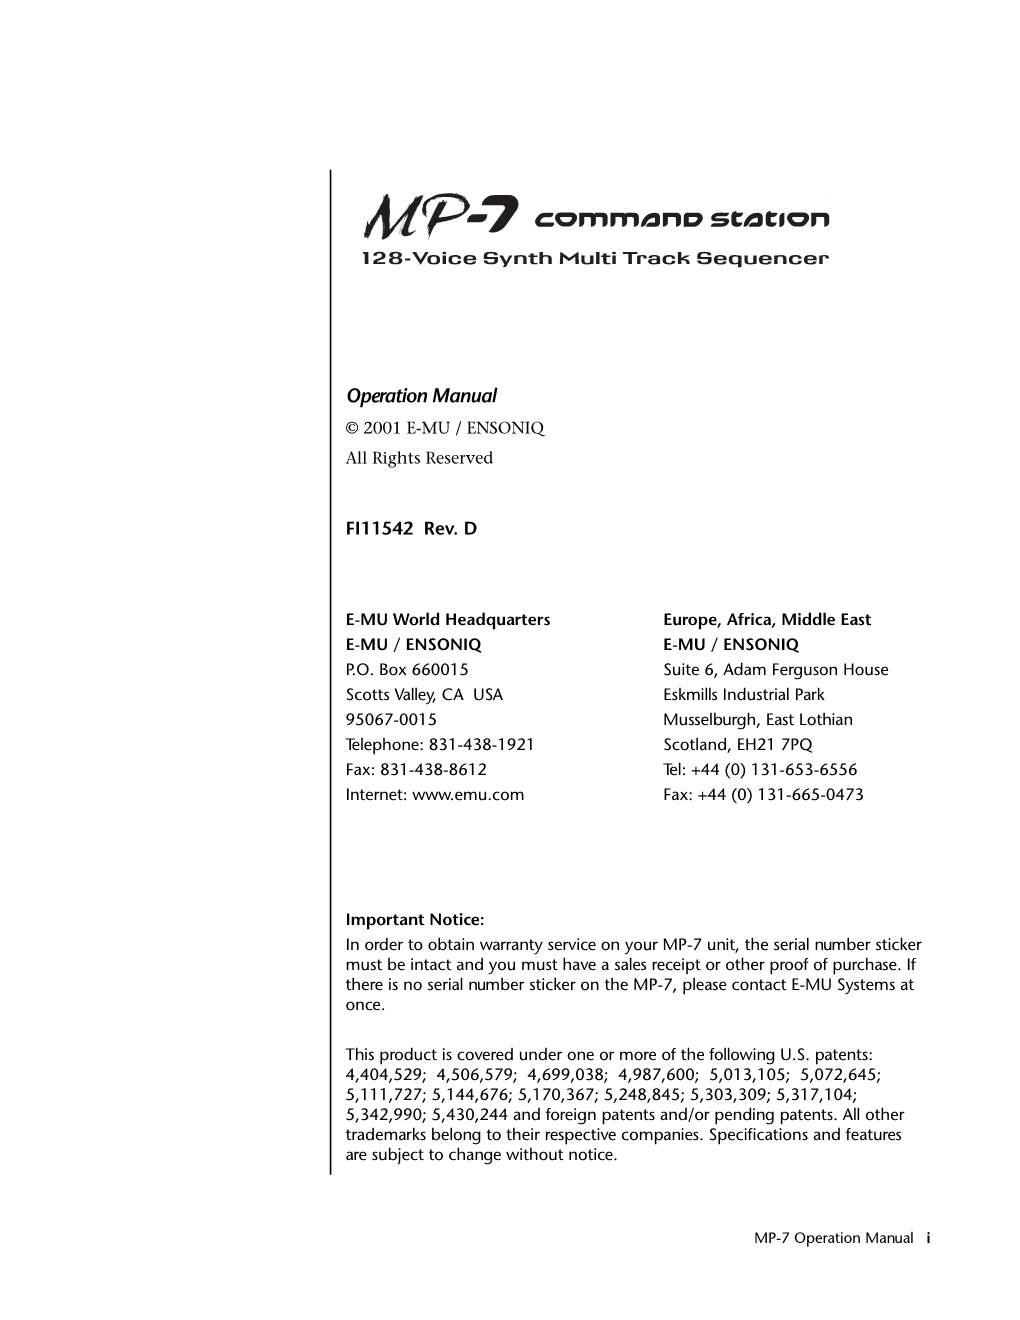 MP-7 Operation Manual (Revison D)